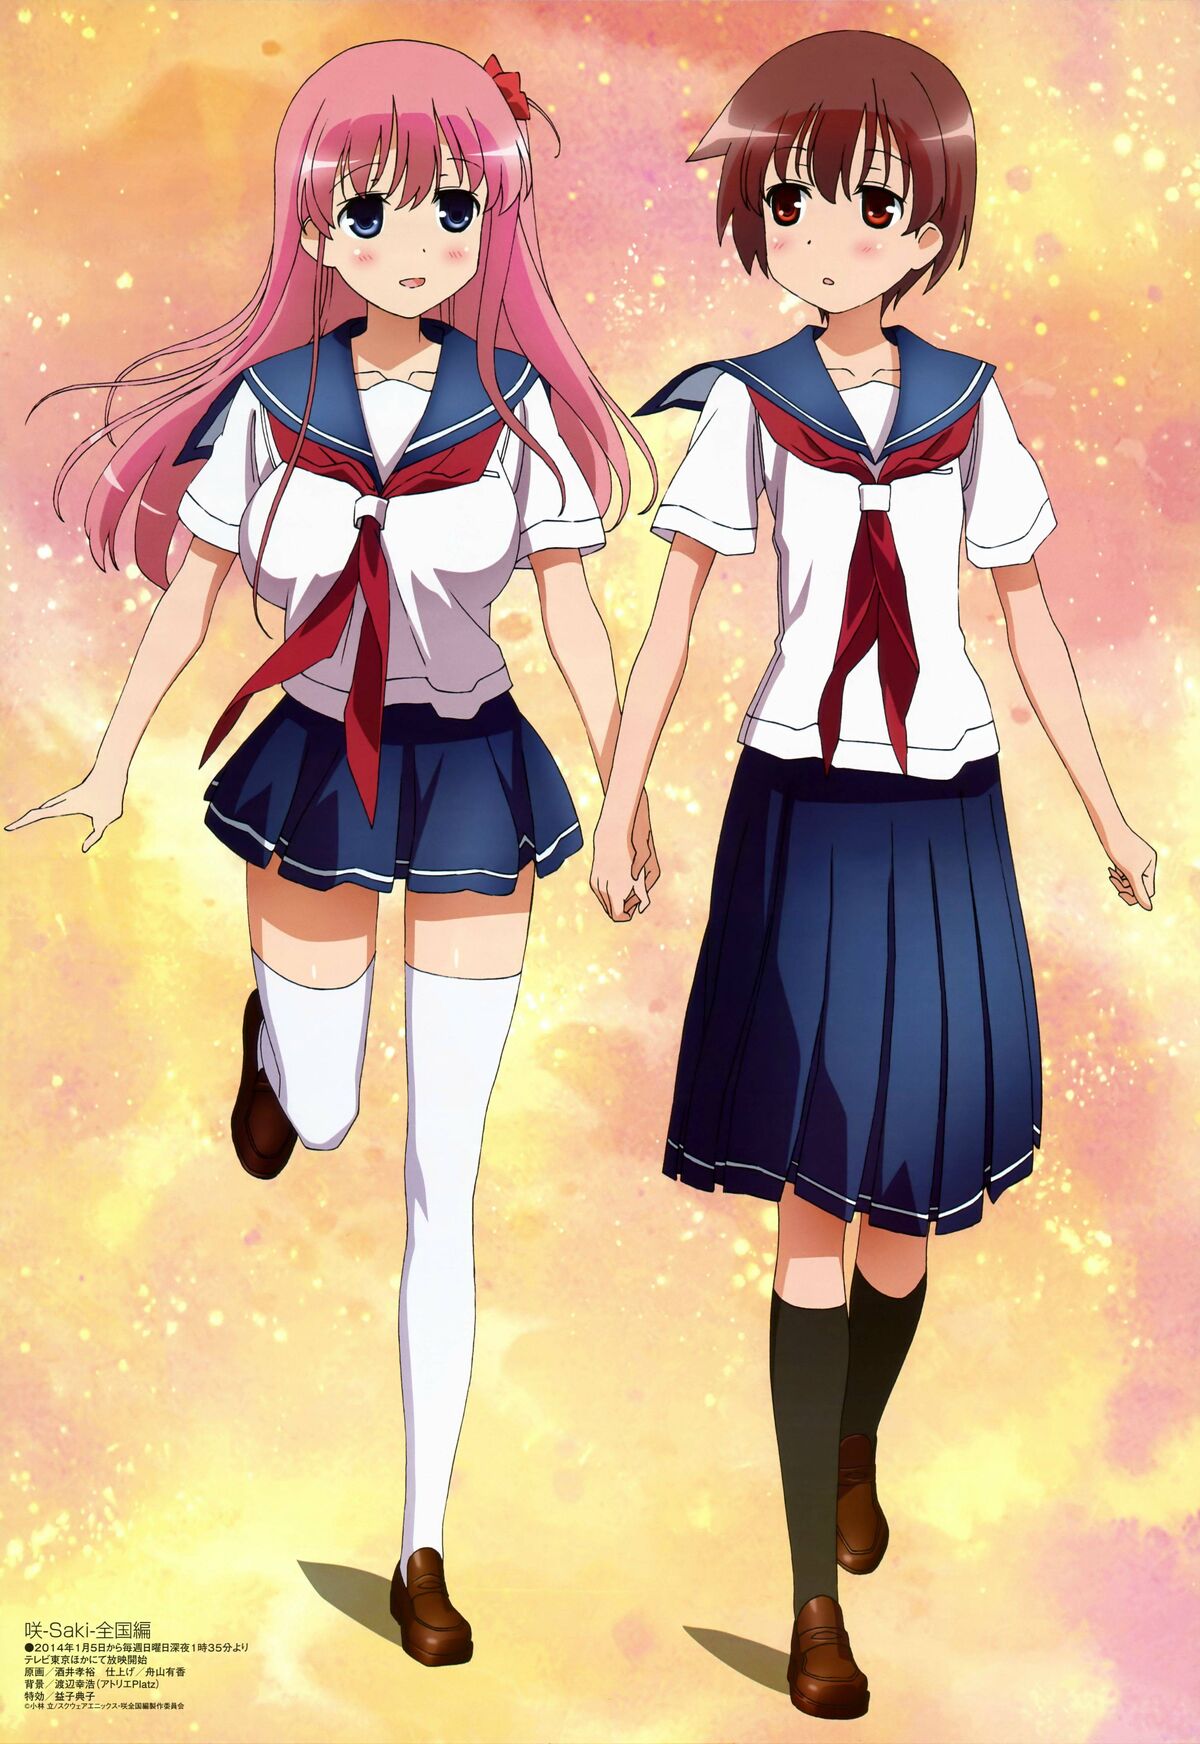 Saki Saki (佐木 咲) - Girlfriend, Girlfriend (カノジョも彼女) - anime s2 | Tensor.Art